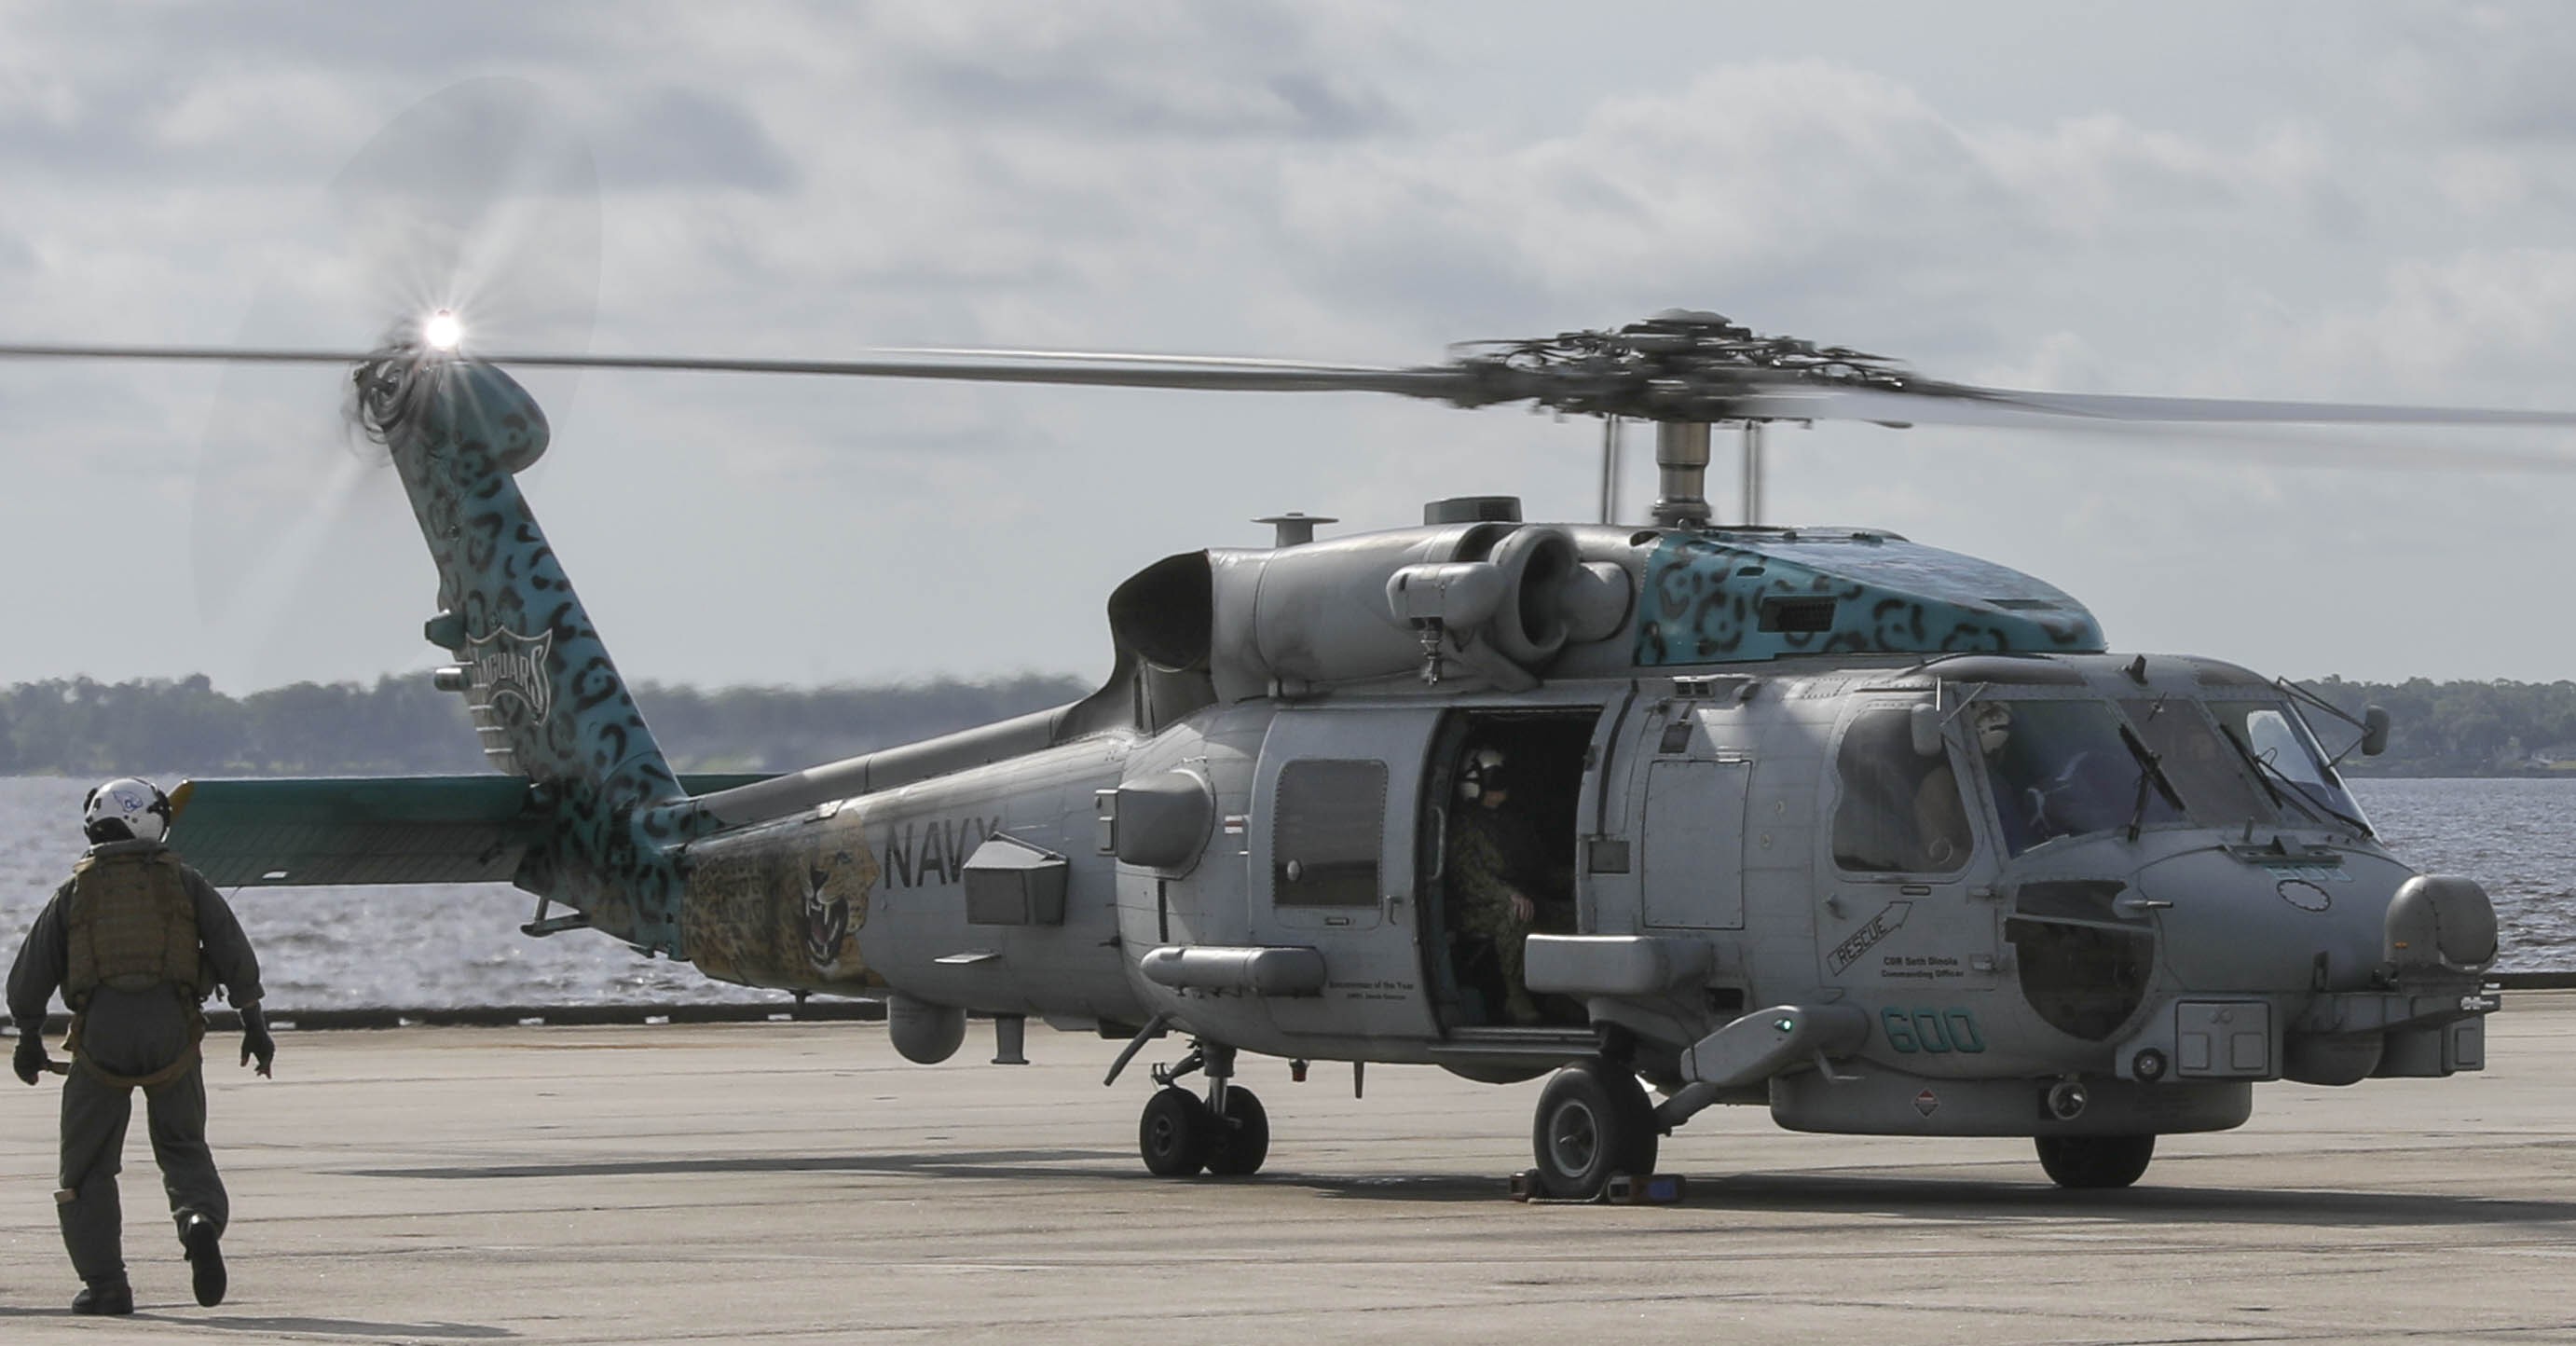 hsm-60 jaguars helicopter maritime strike squadron navy reserve mh-60r seahawk nas jacksonville florida 16